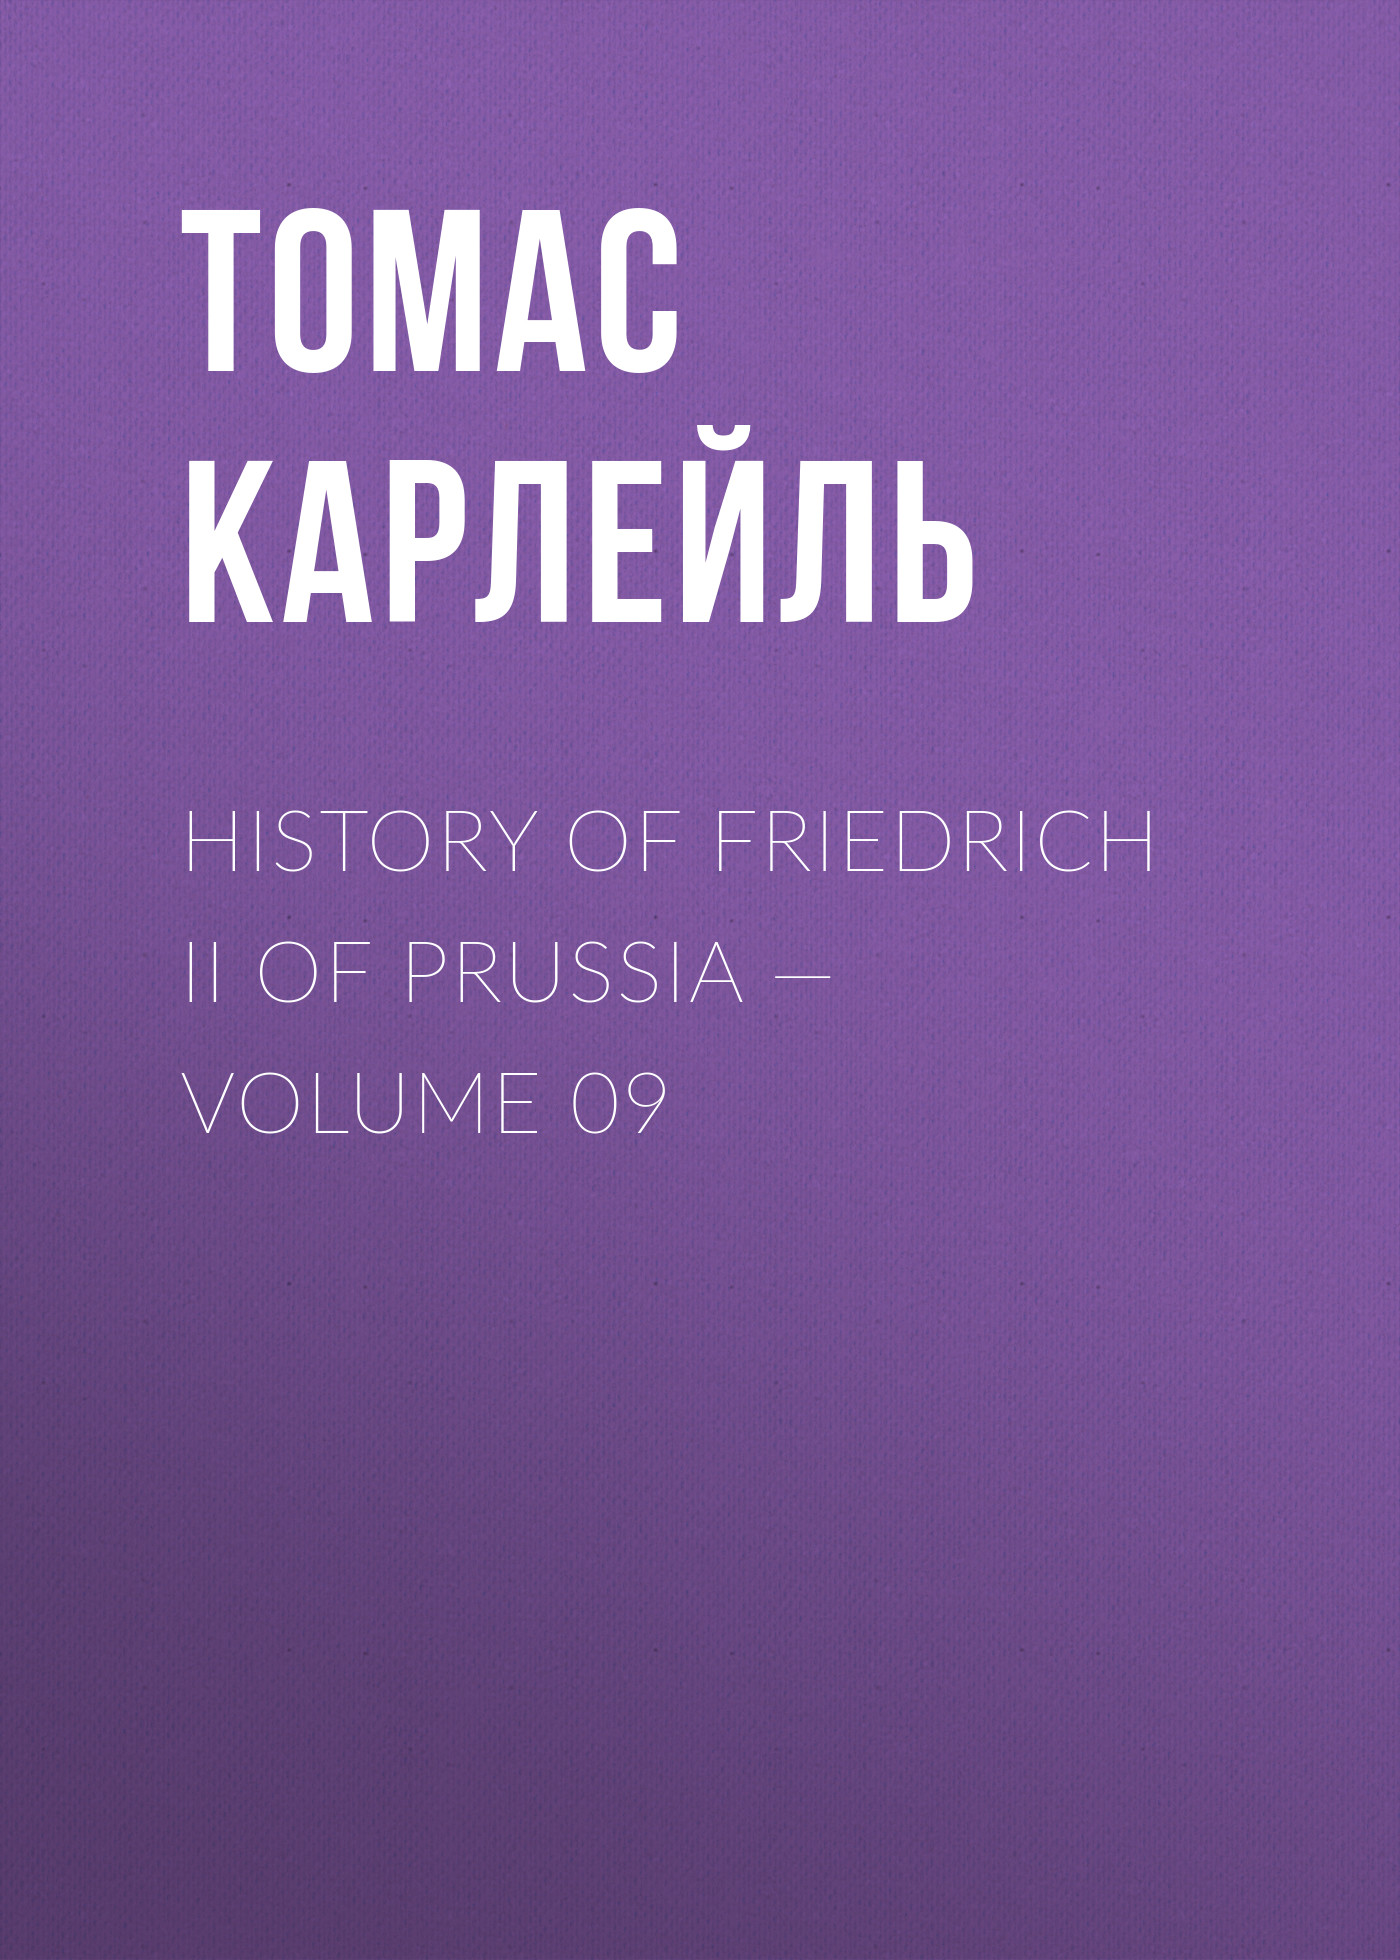 History of Friedrich II of Prussia— Volume 09